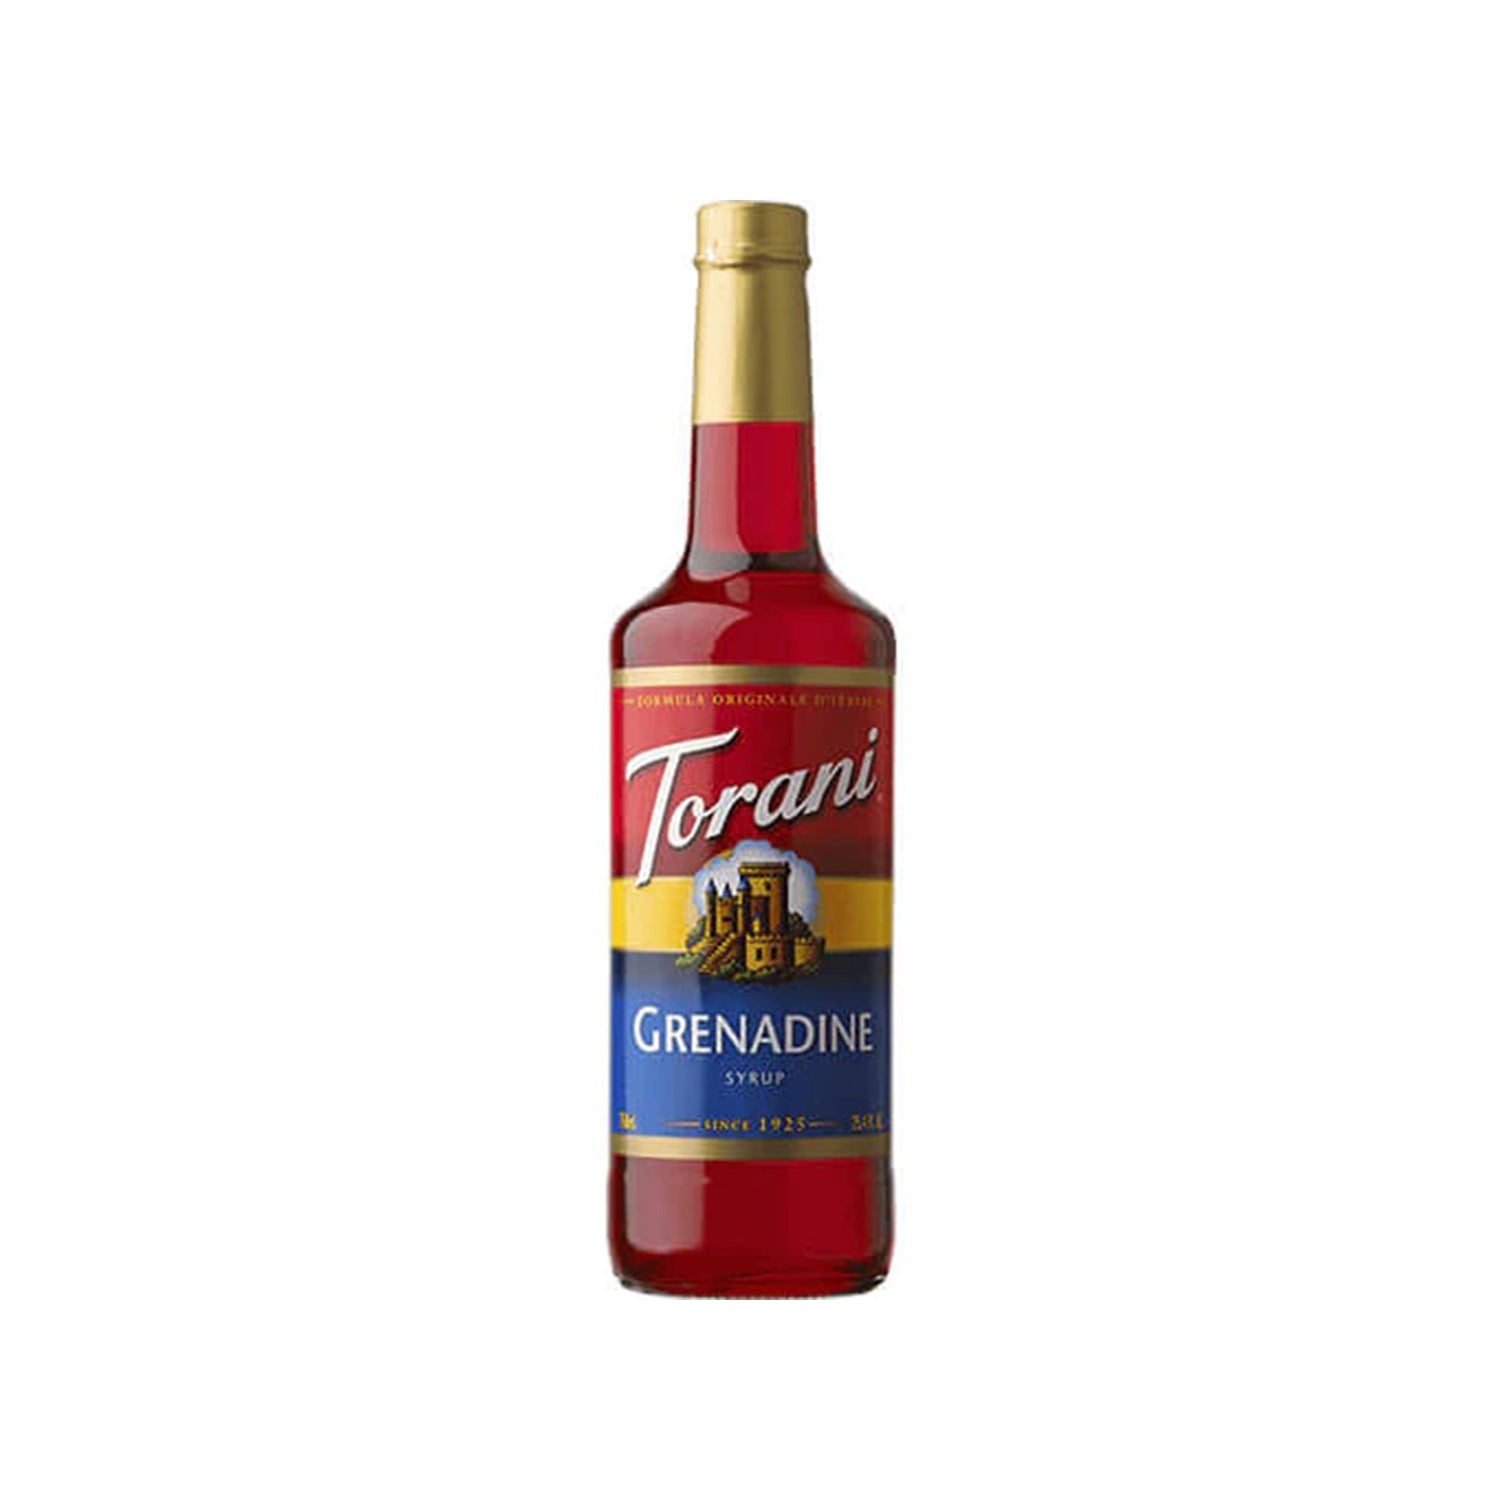 Torani Grenadine Syrup in clear 750mL bottle